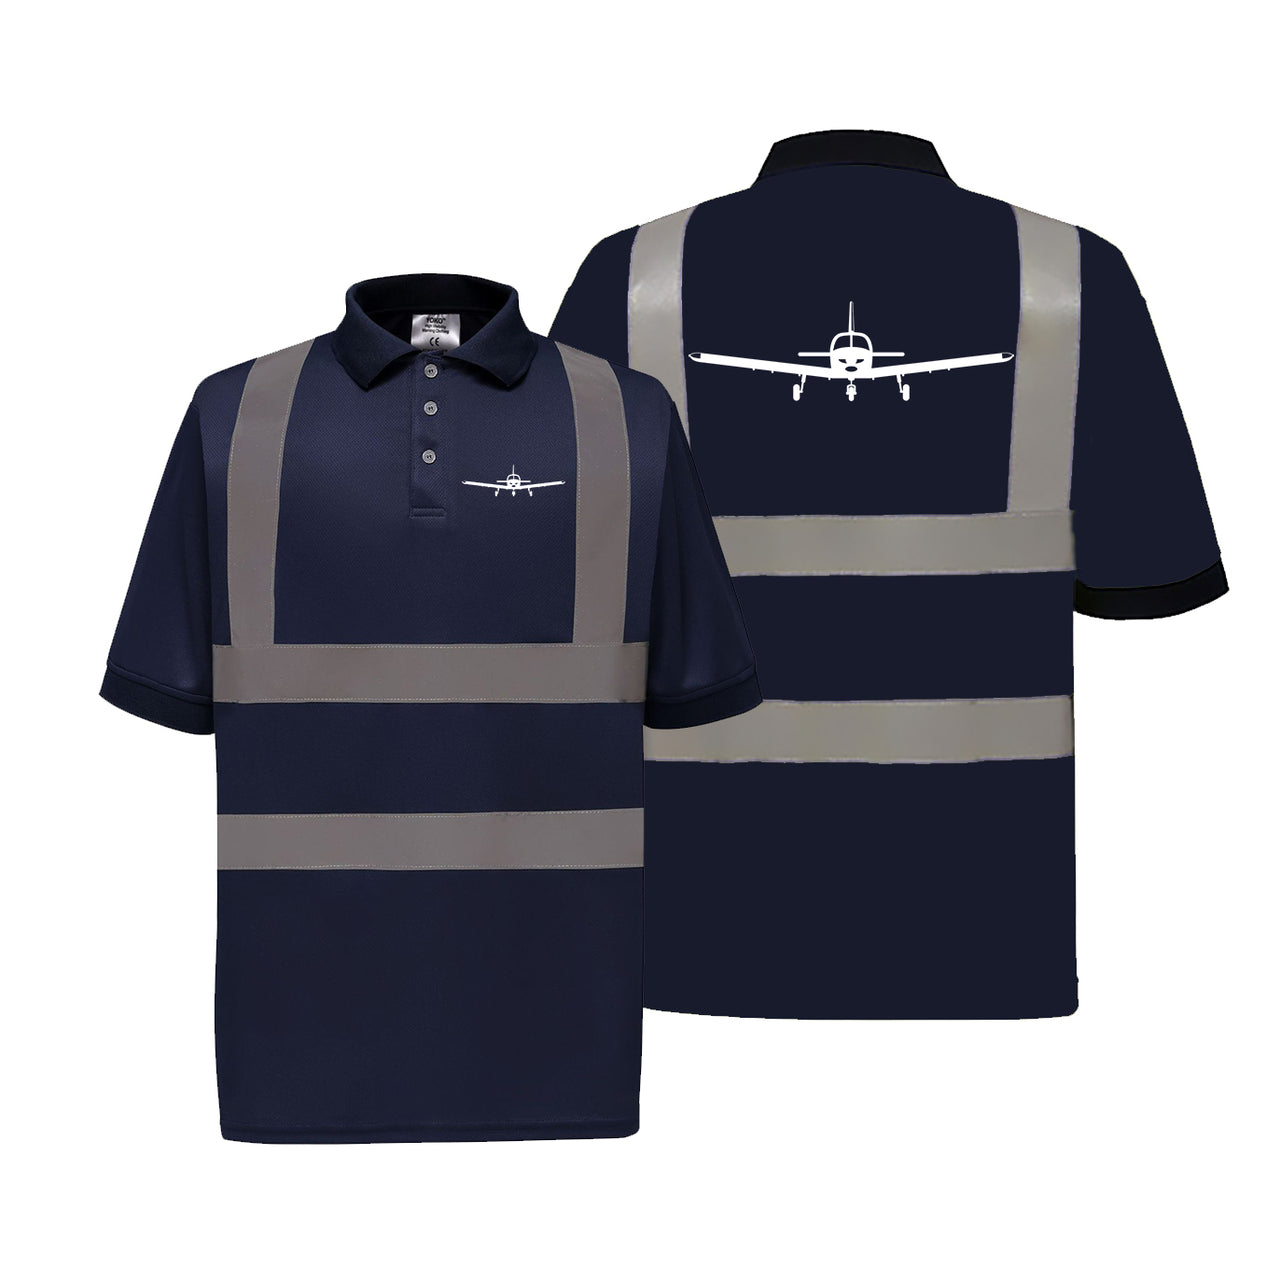 Piper PA28 Silhouette Plane Designed Reflective Polo T-Shirts